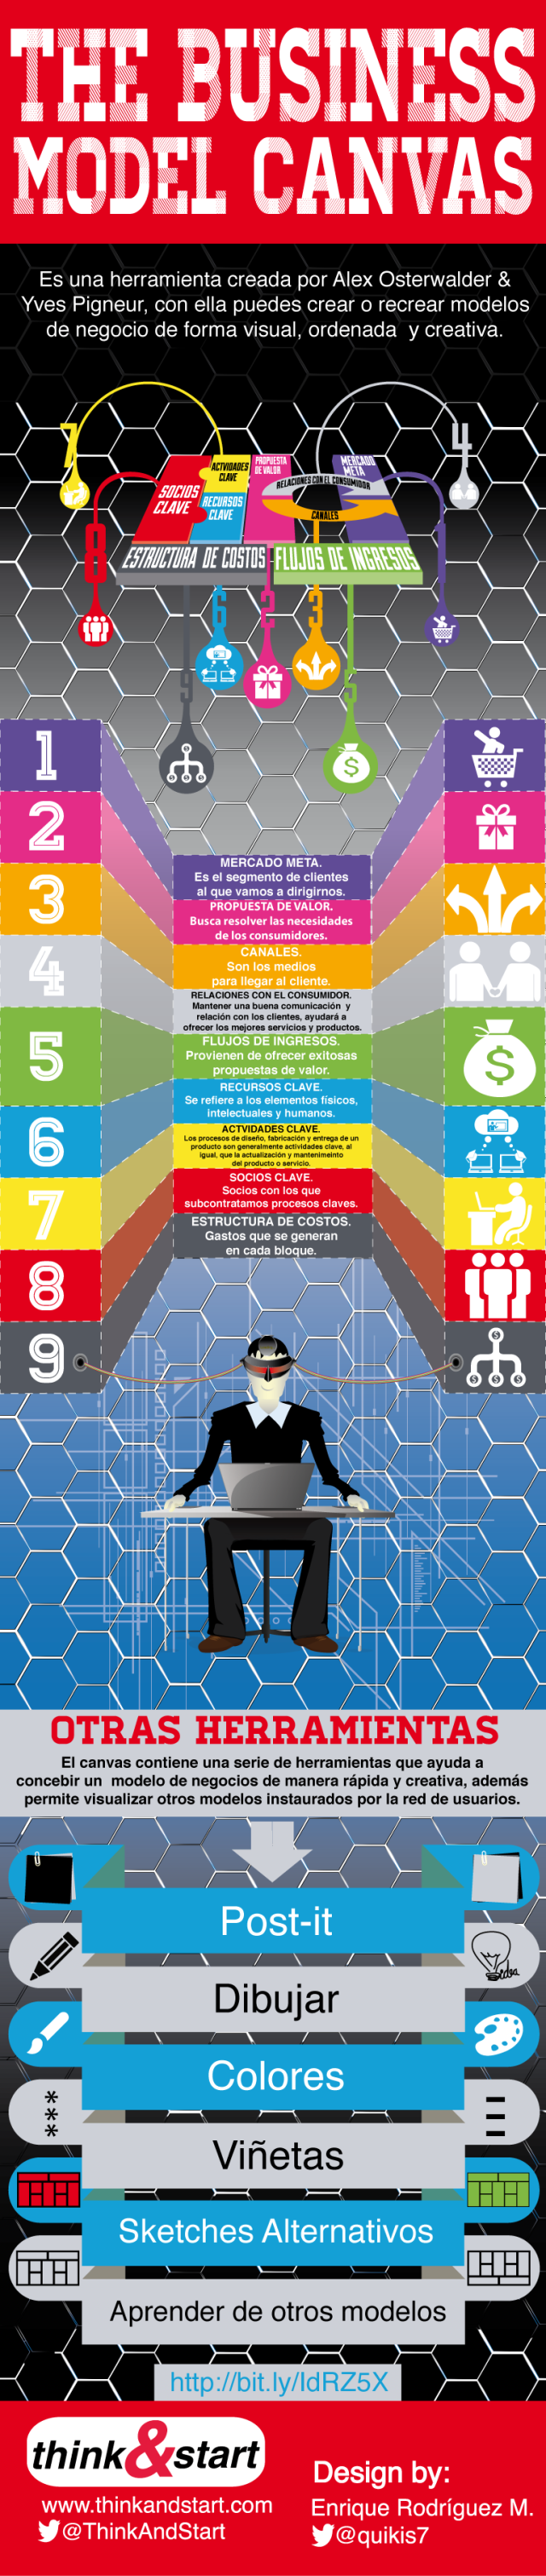 infografia_canvas_el_modelo_de_negocios